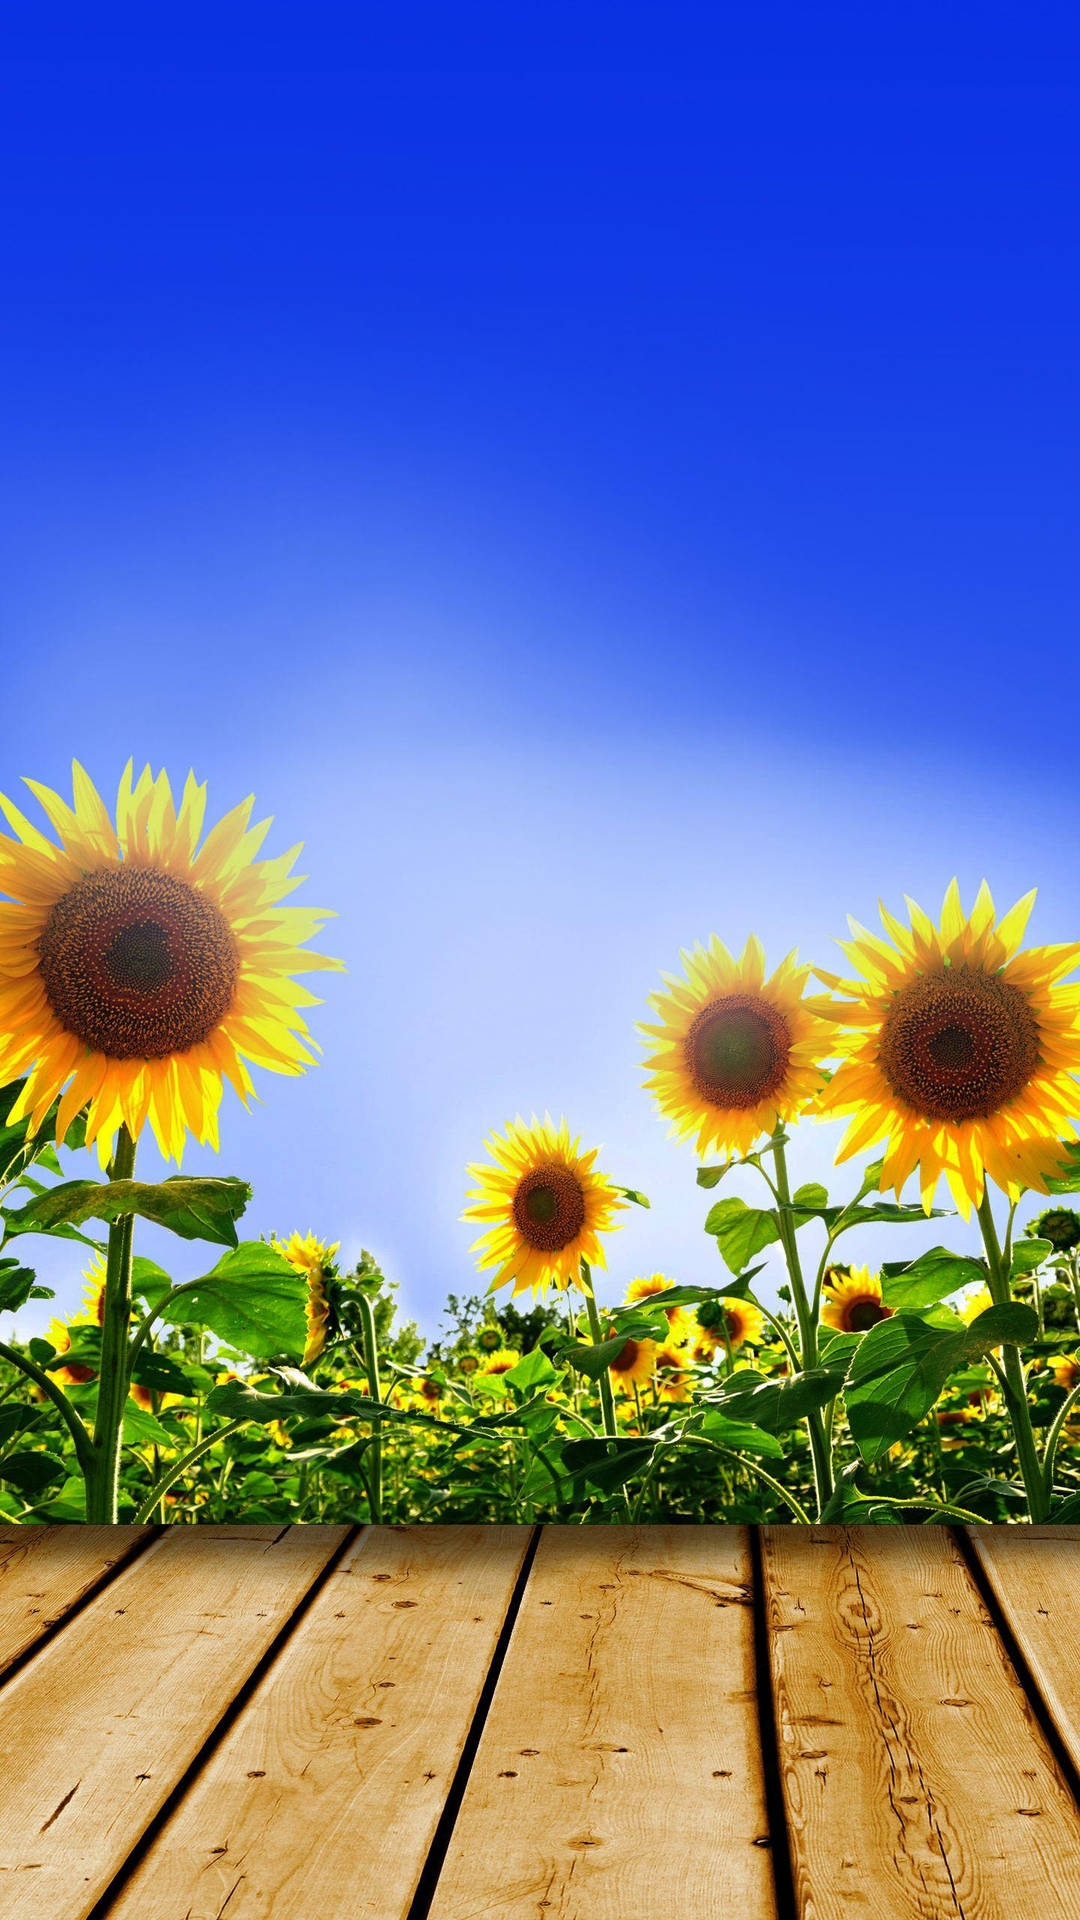 Samsung Galaxy S7 Edge Sunflowers Wallpaper